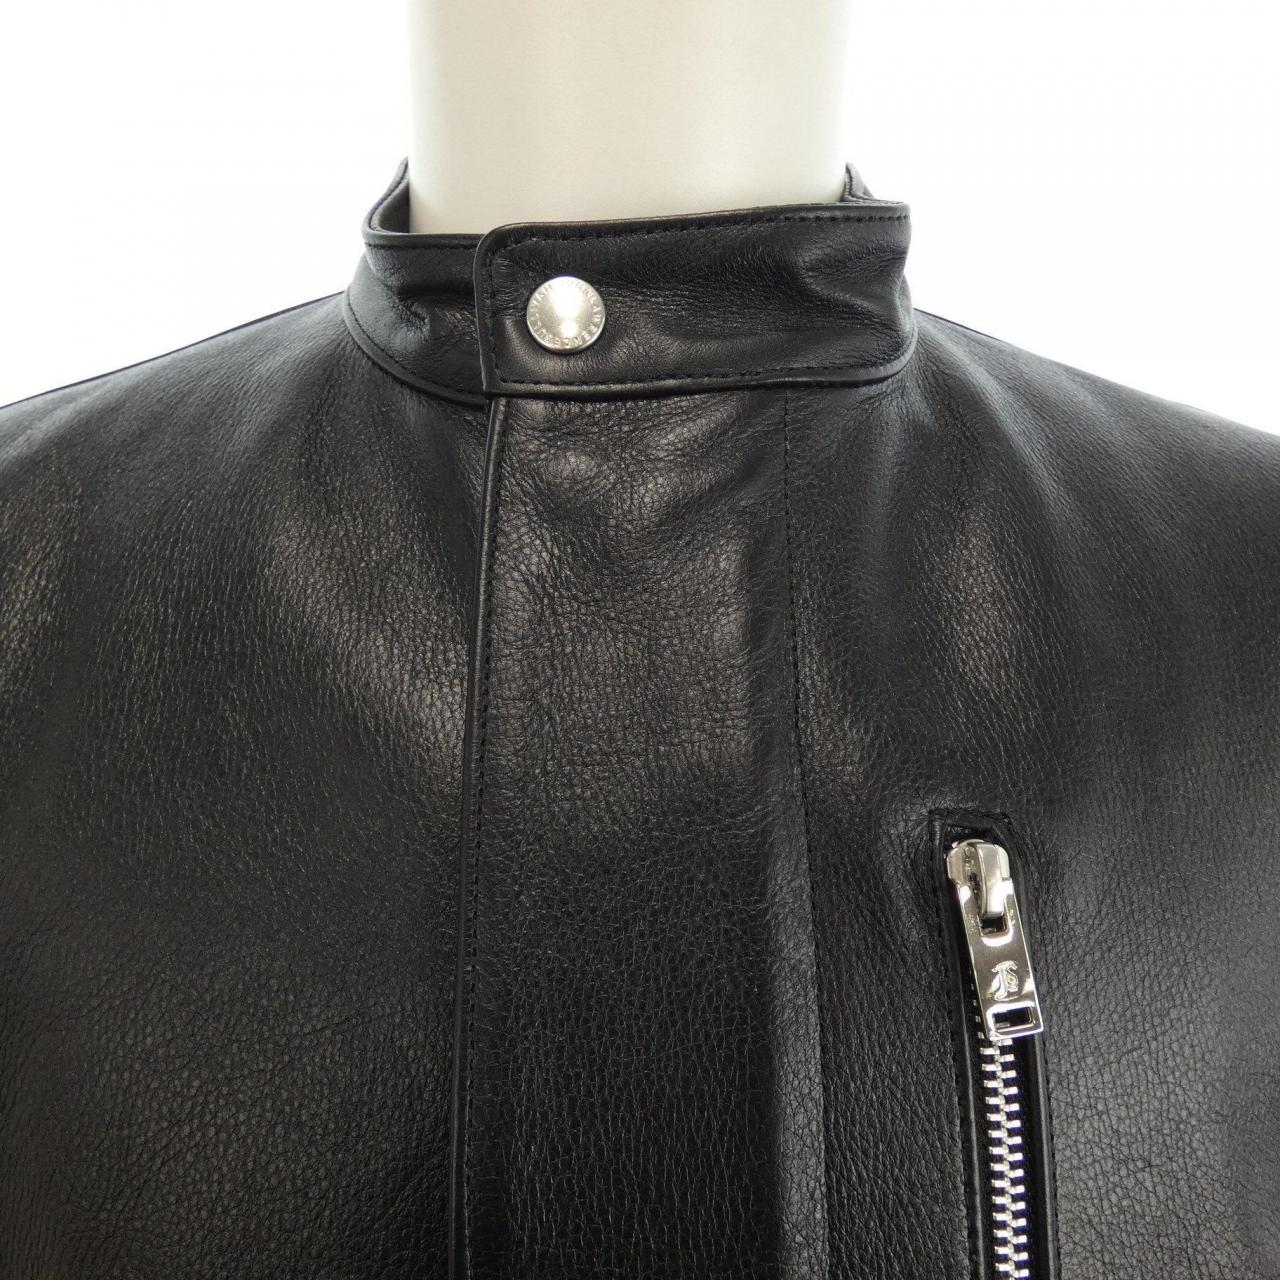 John Lawrence Sullivan JOHNLAWRENCESULLIVAN leather jacket